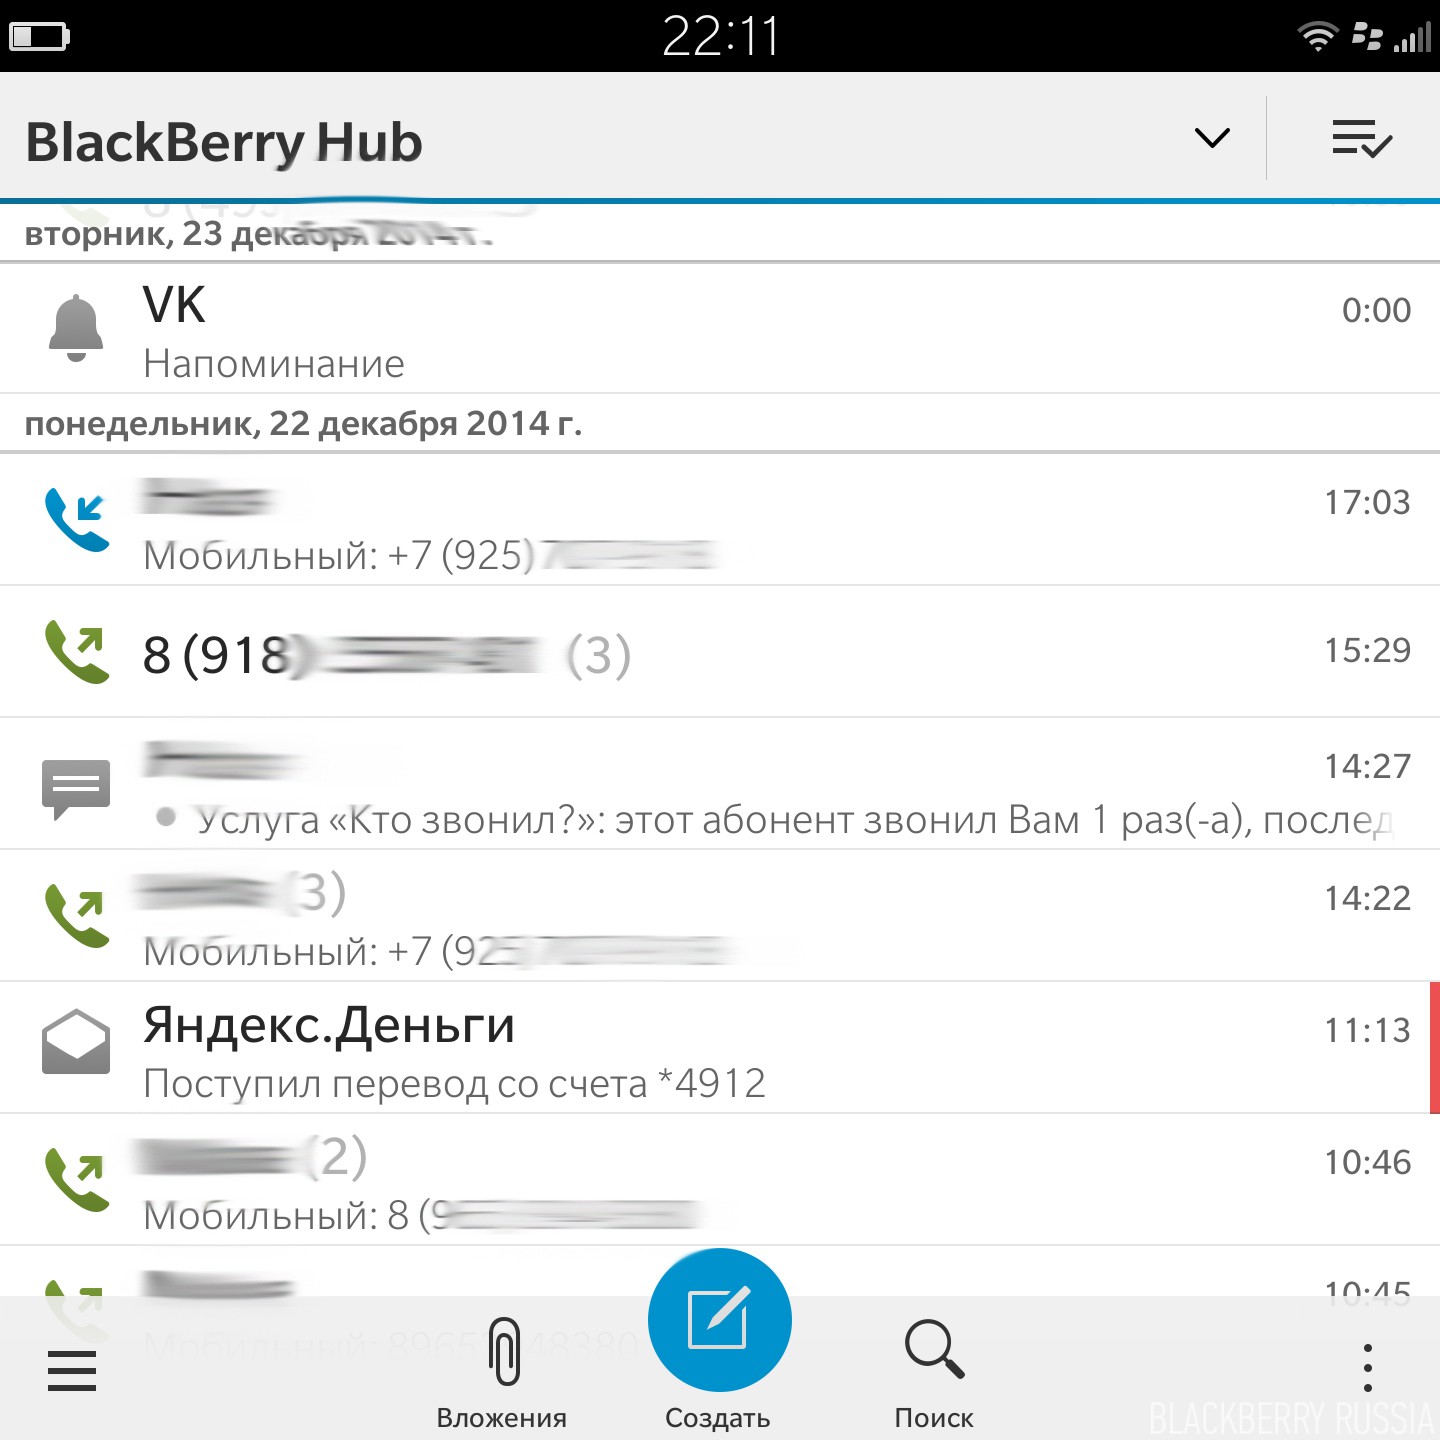 blackberryrussia-blackberry-hub-obzor-01